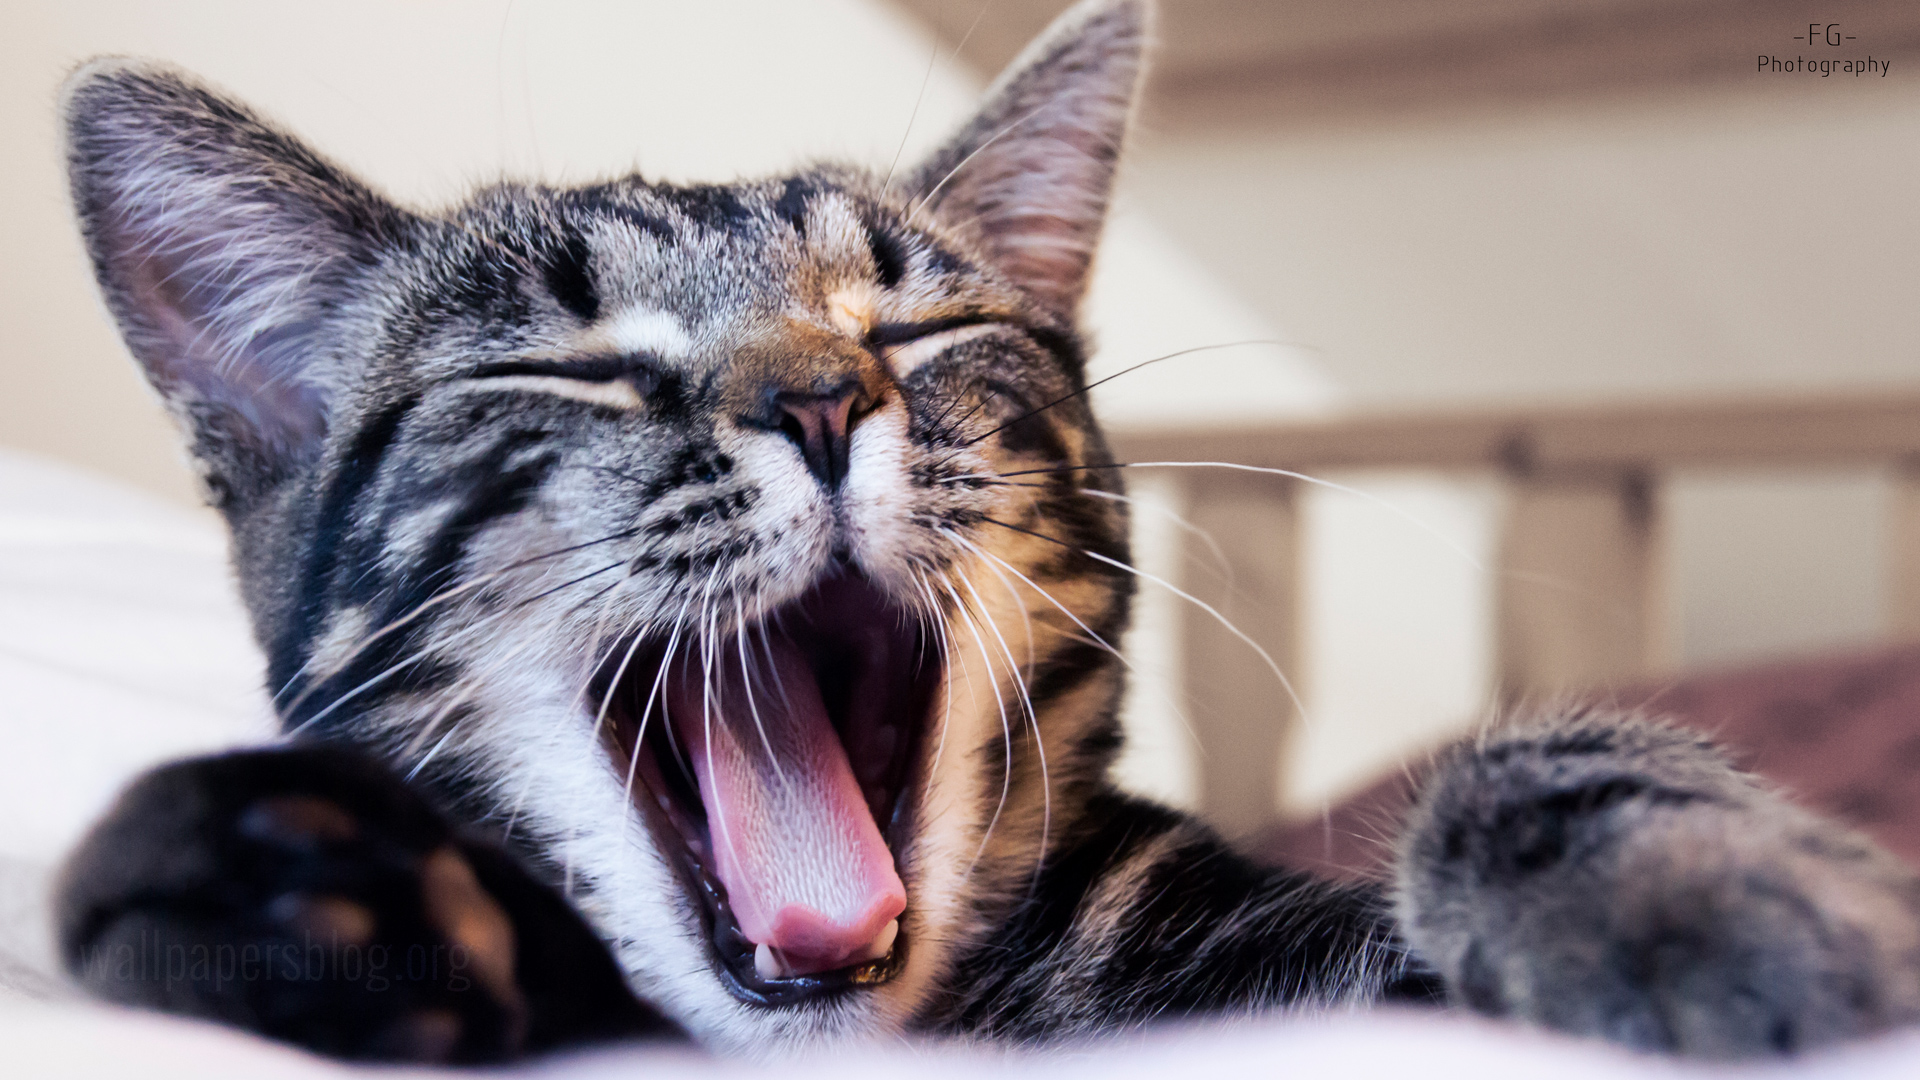 Cat yawning full hd 1080p wallpaper desktop background